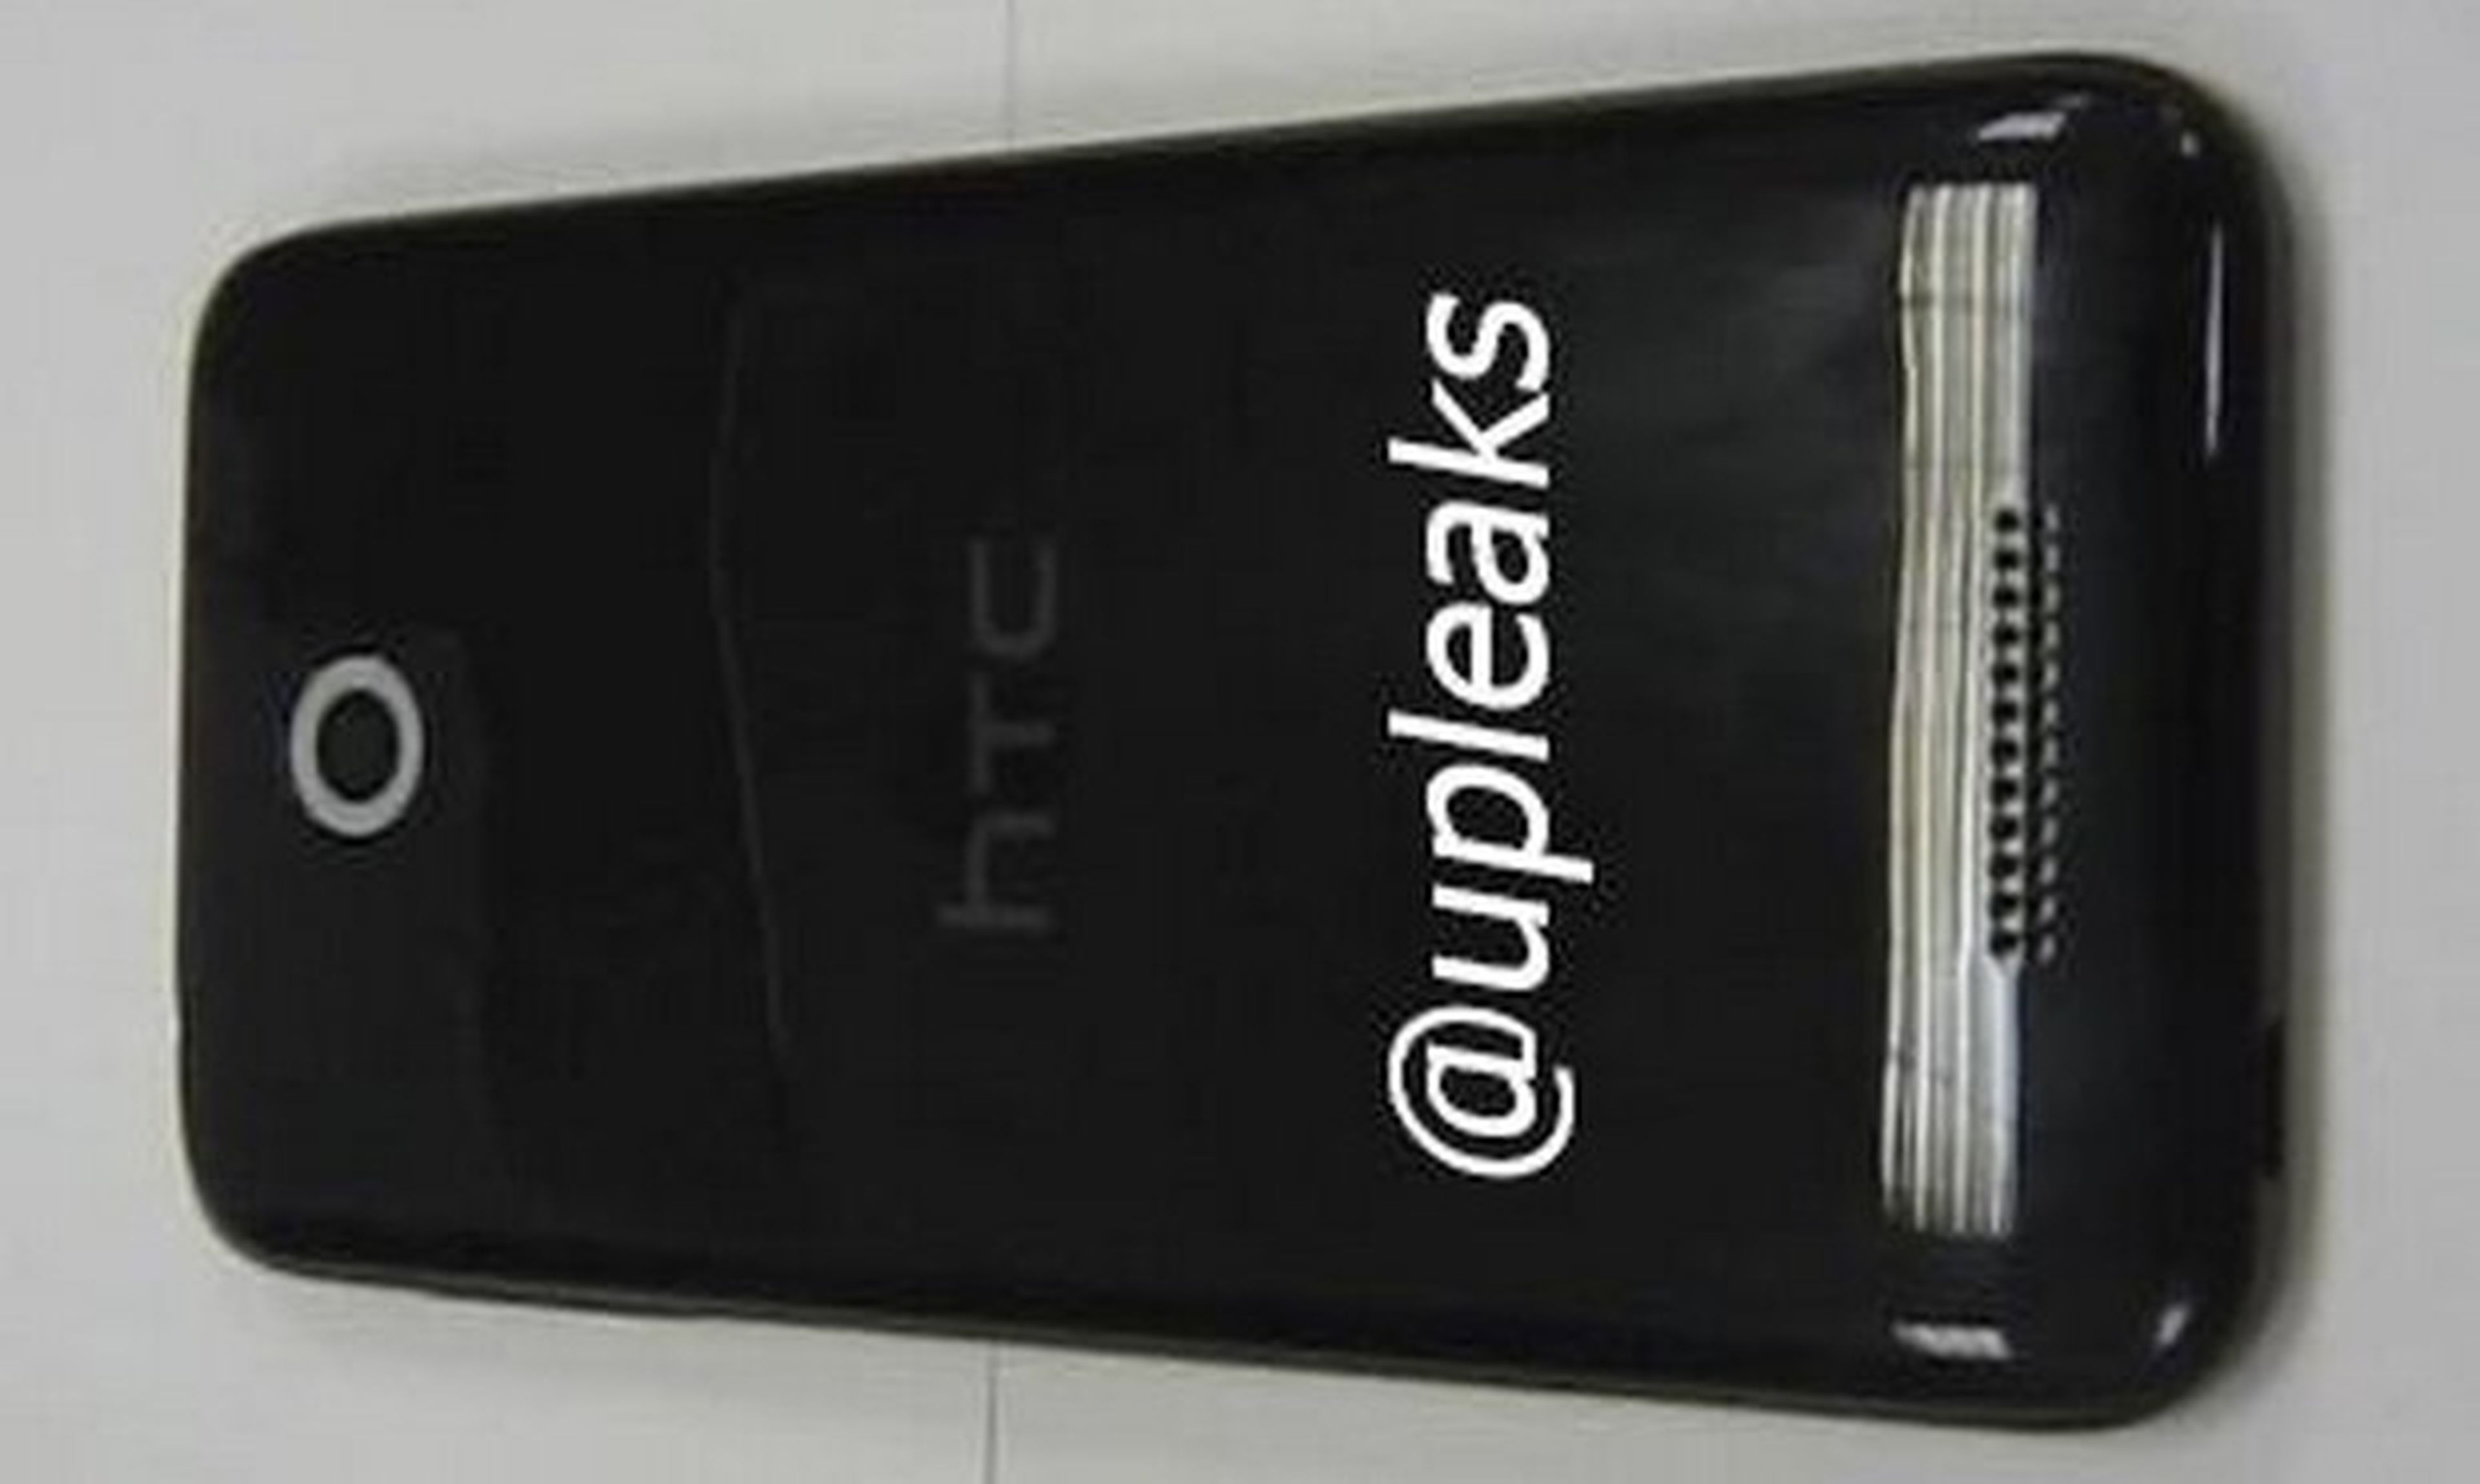 HTC Desire A11